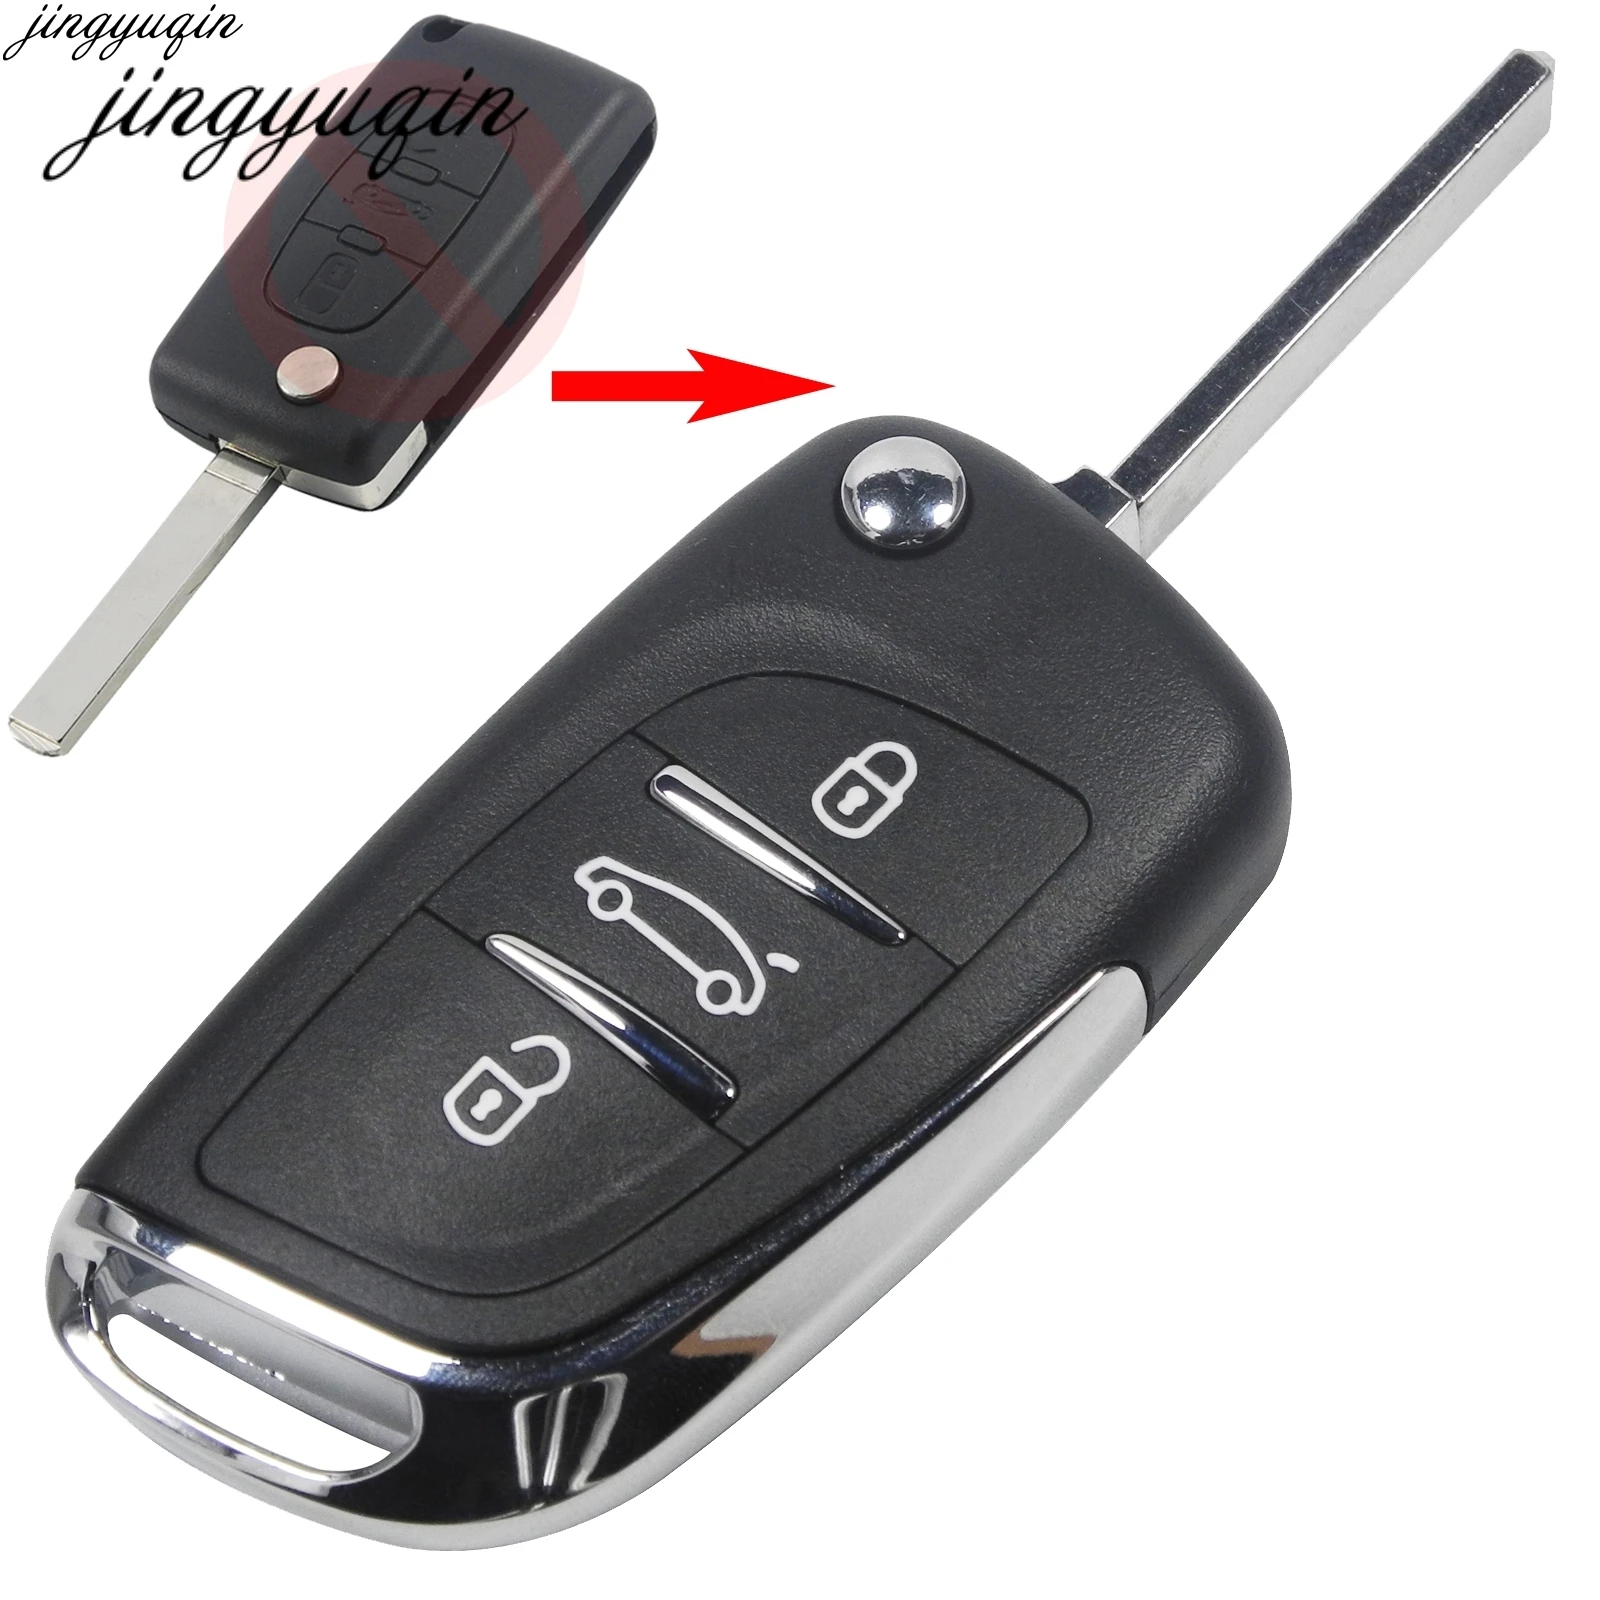 Jingyuqin Modified Flip Key Shell Remote Key 3 Button For Citroen C2 C3 C4 Hatch Coupe VTR Berlingo C6 C8 Key CE0536 VA2 Blade